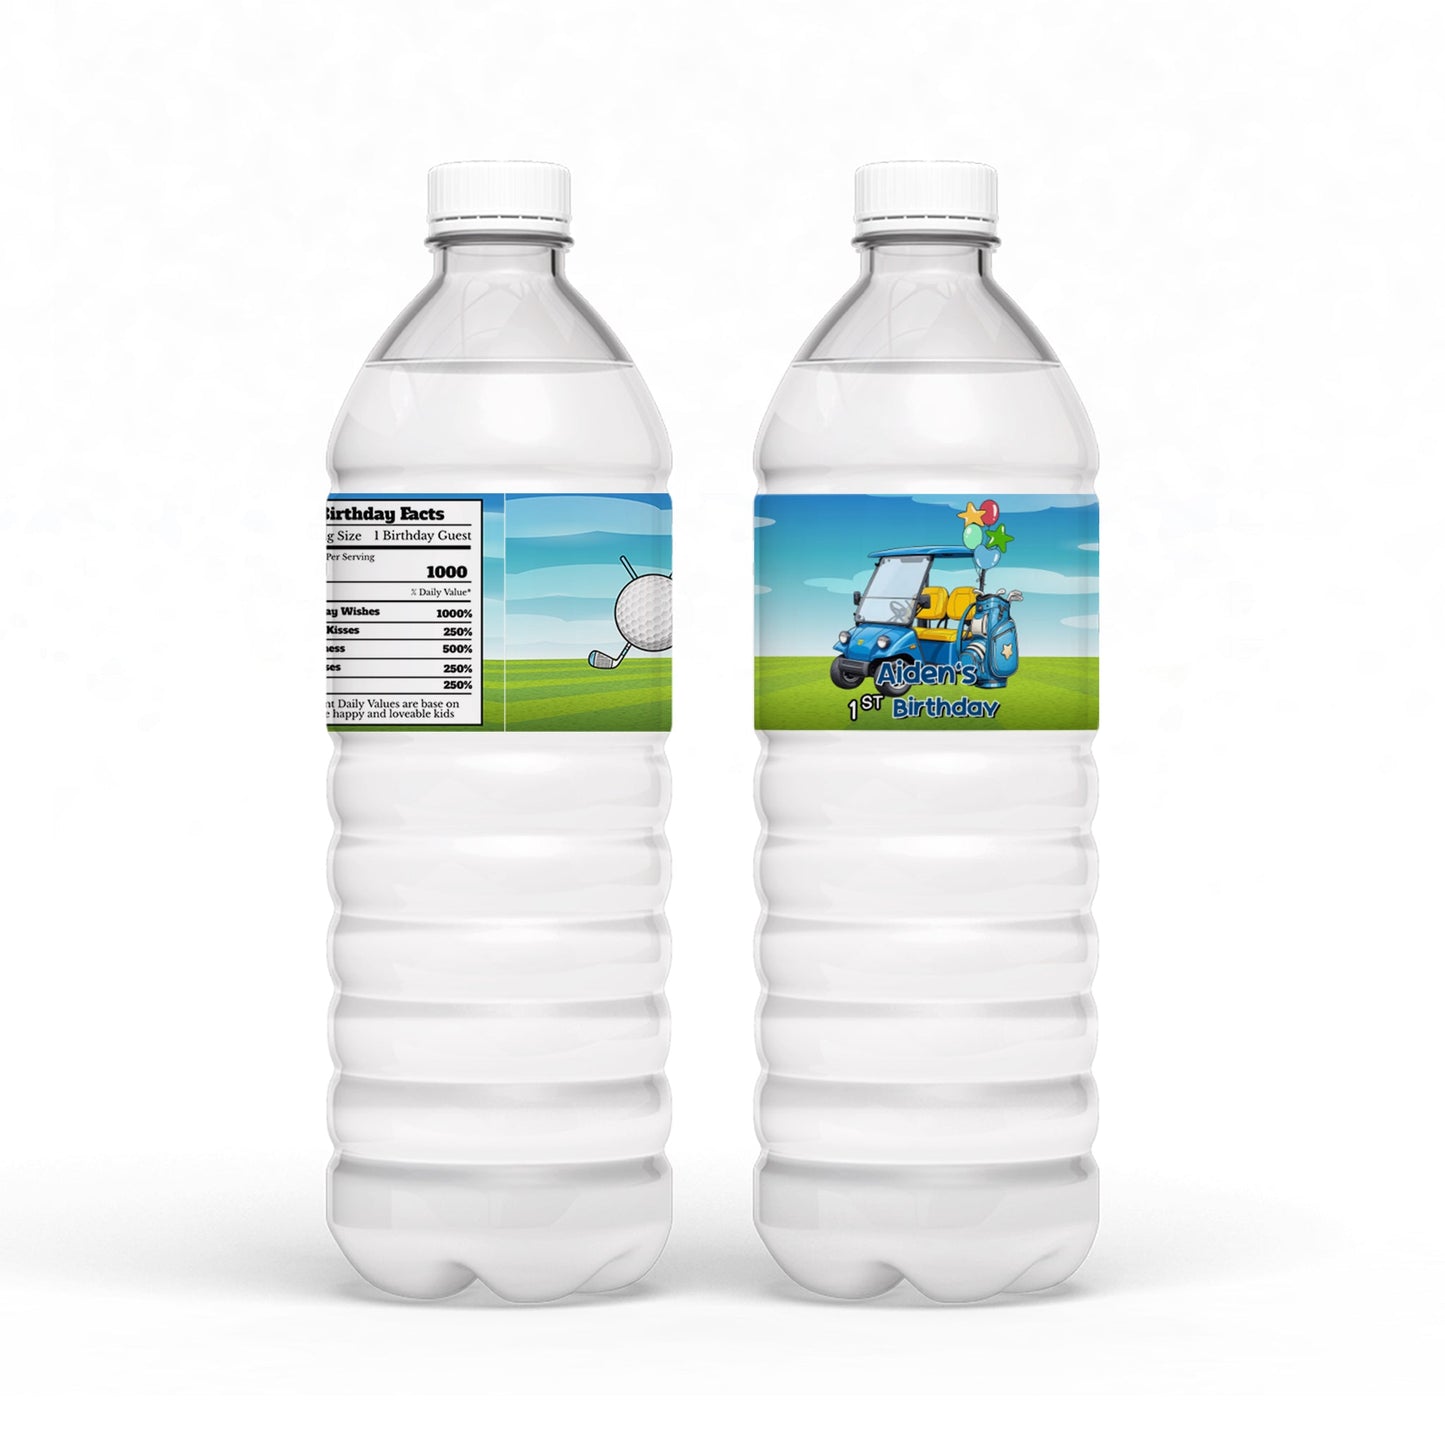 Mini Golf Water Bottle Label: Custom water bottle labels with vibrant mini golf artwork